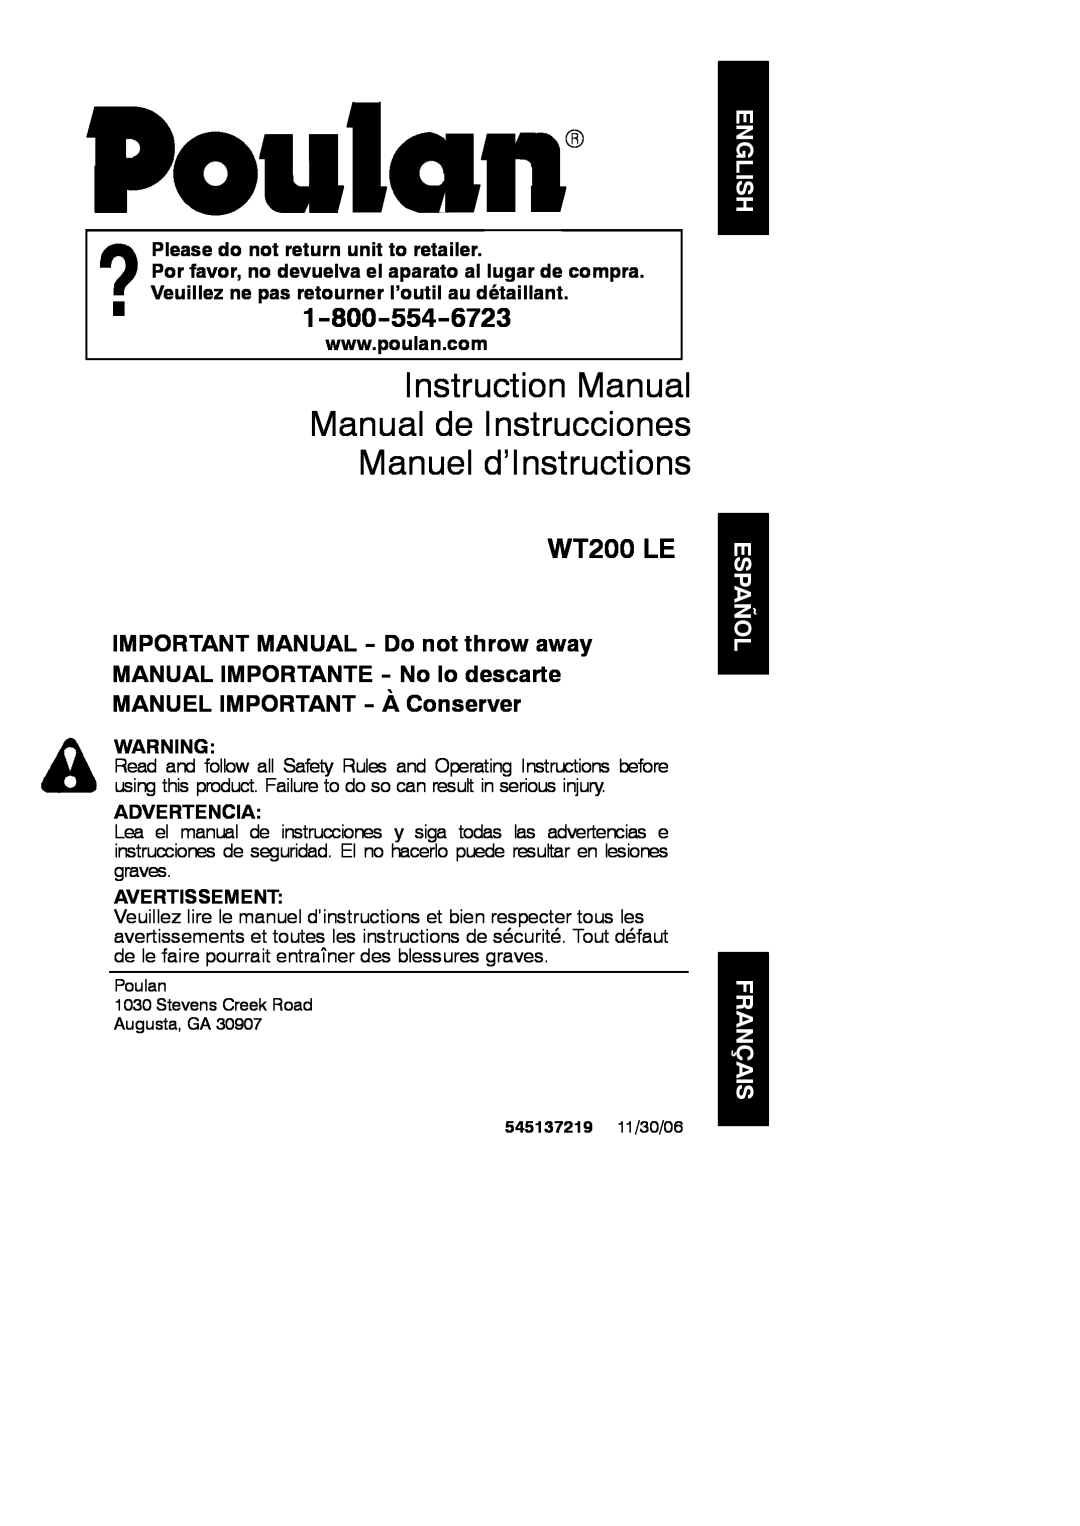 Poulan 545137219 instruction manual WT200 LE, English Español Français, Please do not return unit to retailer, Advertencia 